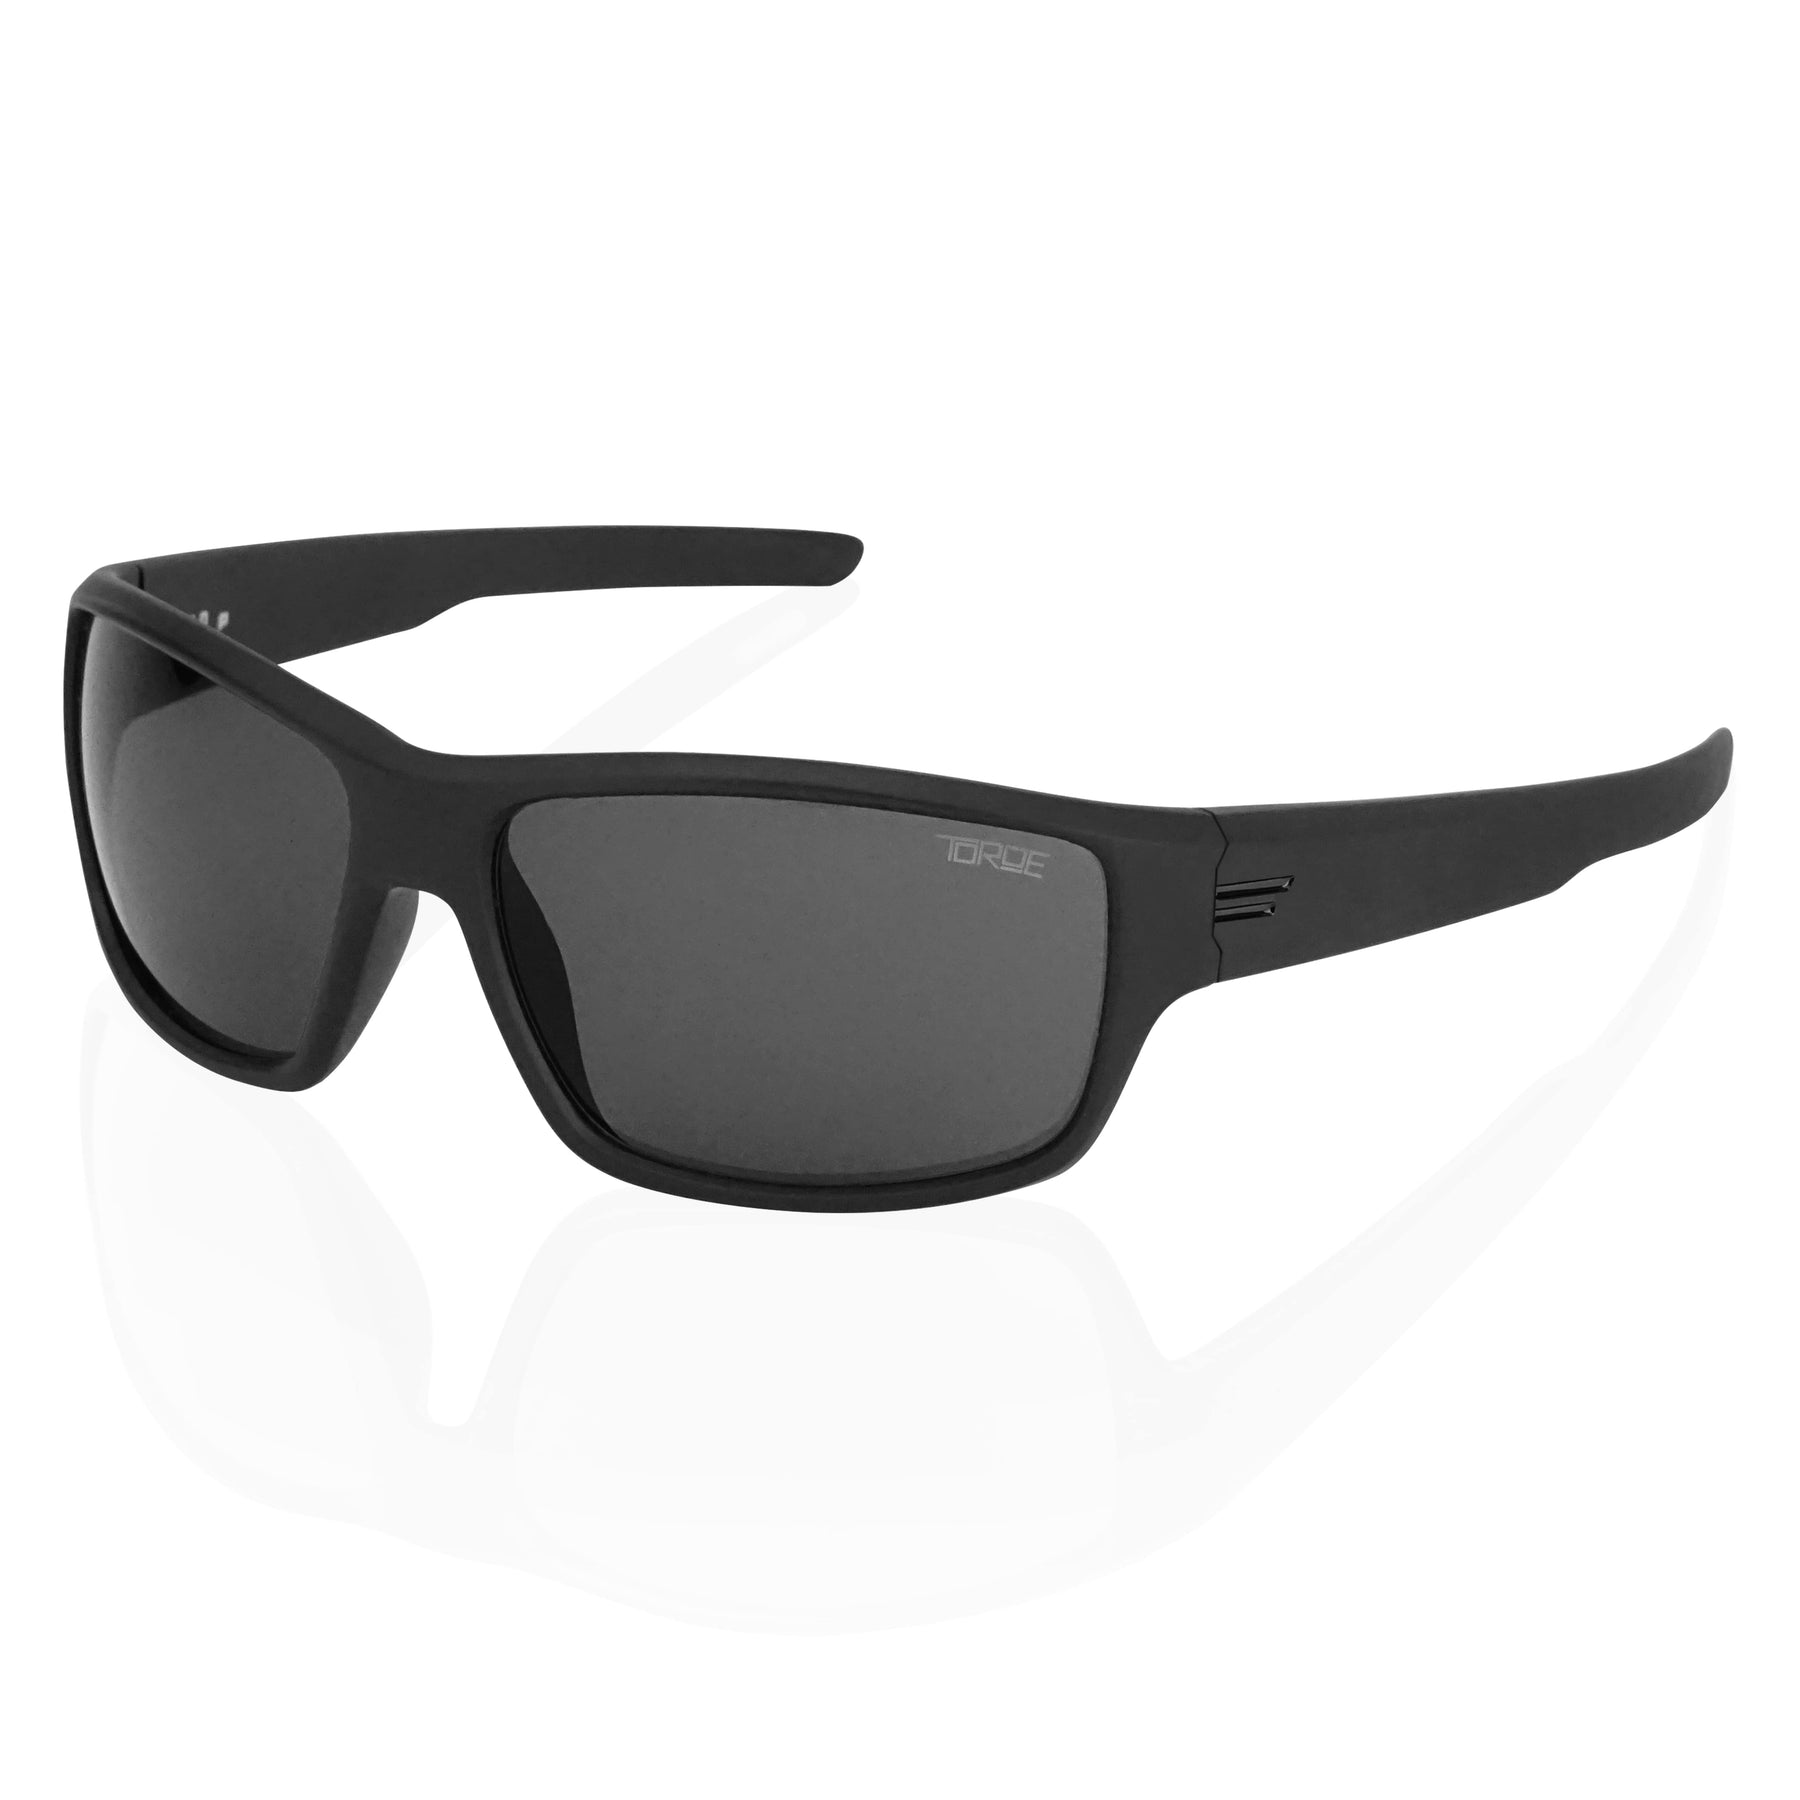 Toroe 'Field' Polarized Sunglasses with Lifetime Warranty Glossy Black / White / Baja Blue Mirror Lens